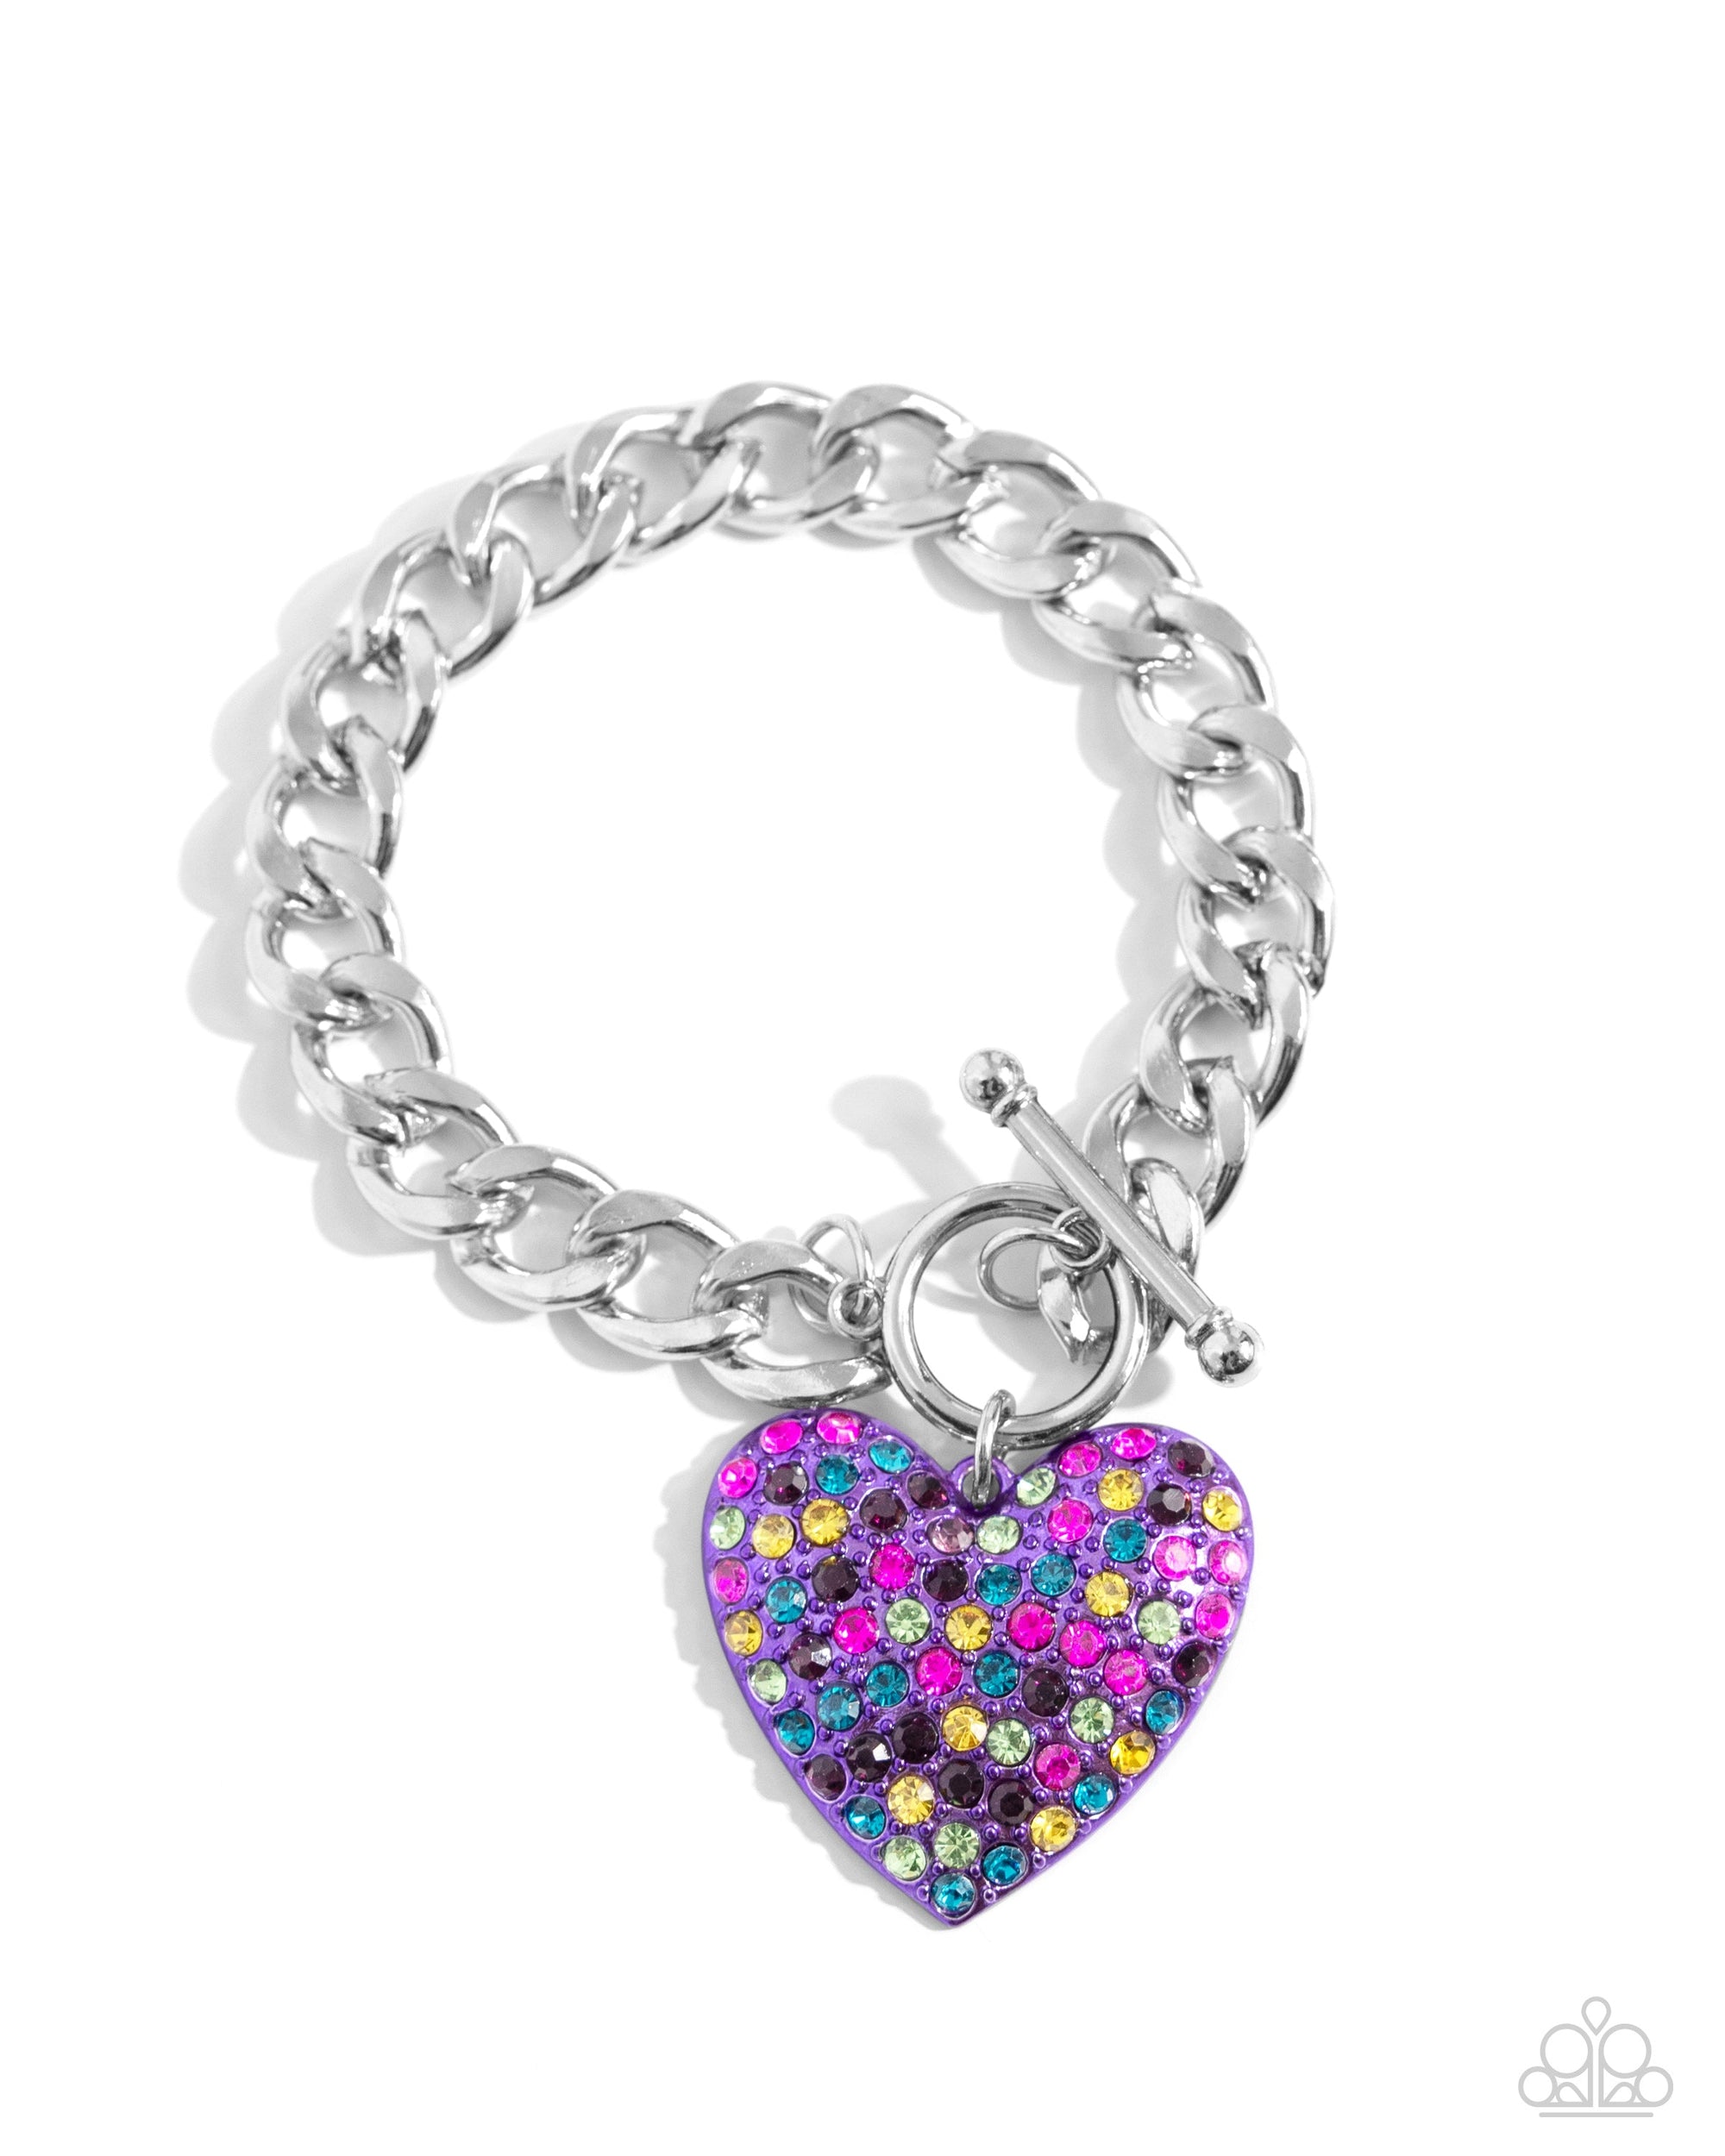 Enamored Elegance Purple Rhinestone Heart Bracelet - Paparazzi Accessories- lightbox - CarasShop.com - $5 Jewelry by Cara Jewels